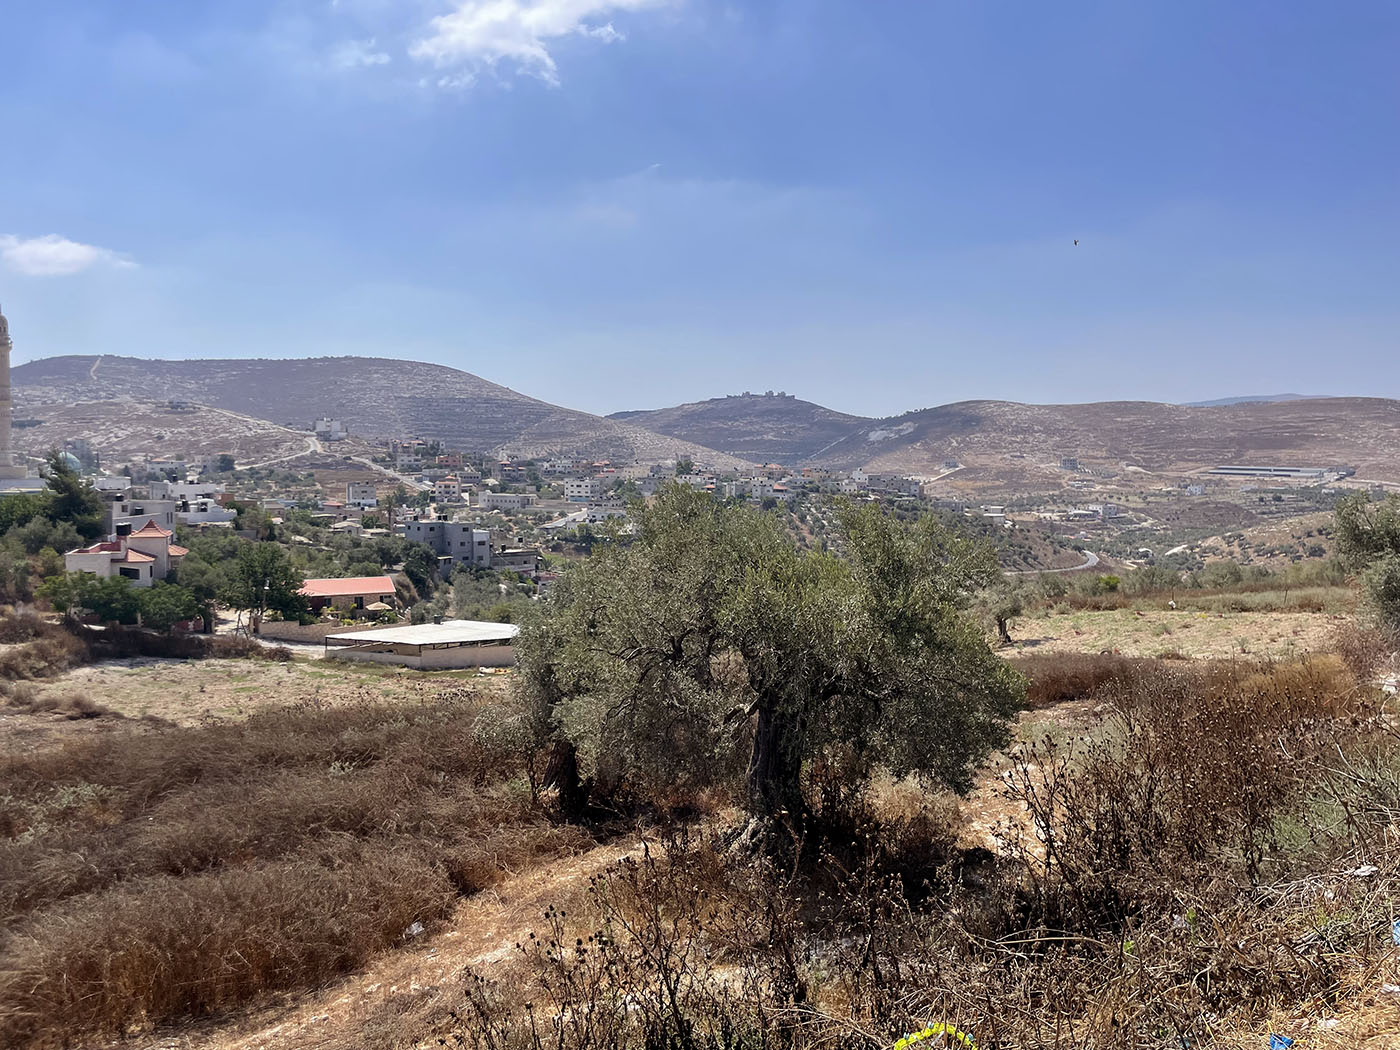 North Palestine in the region of Arraba